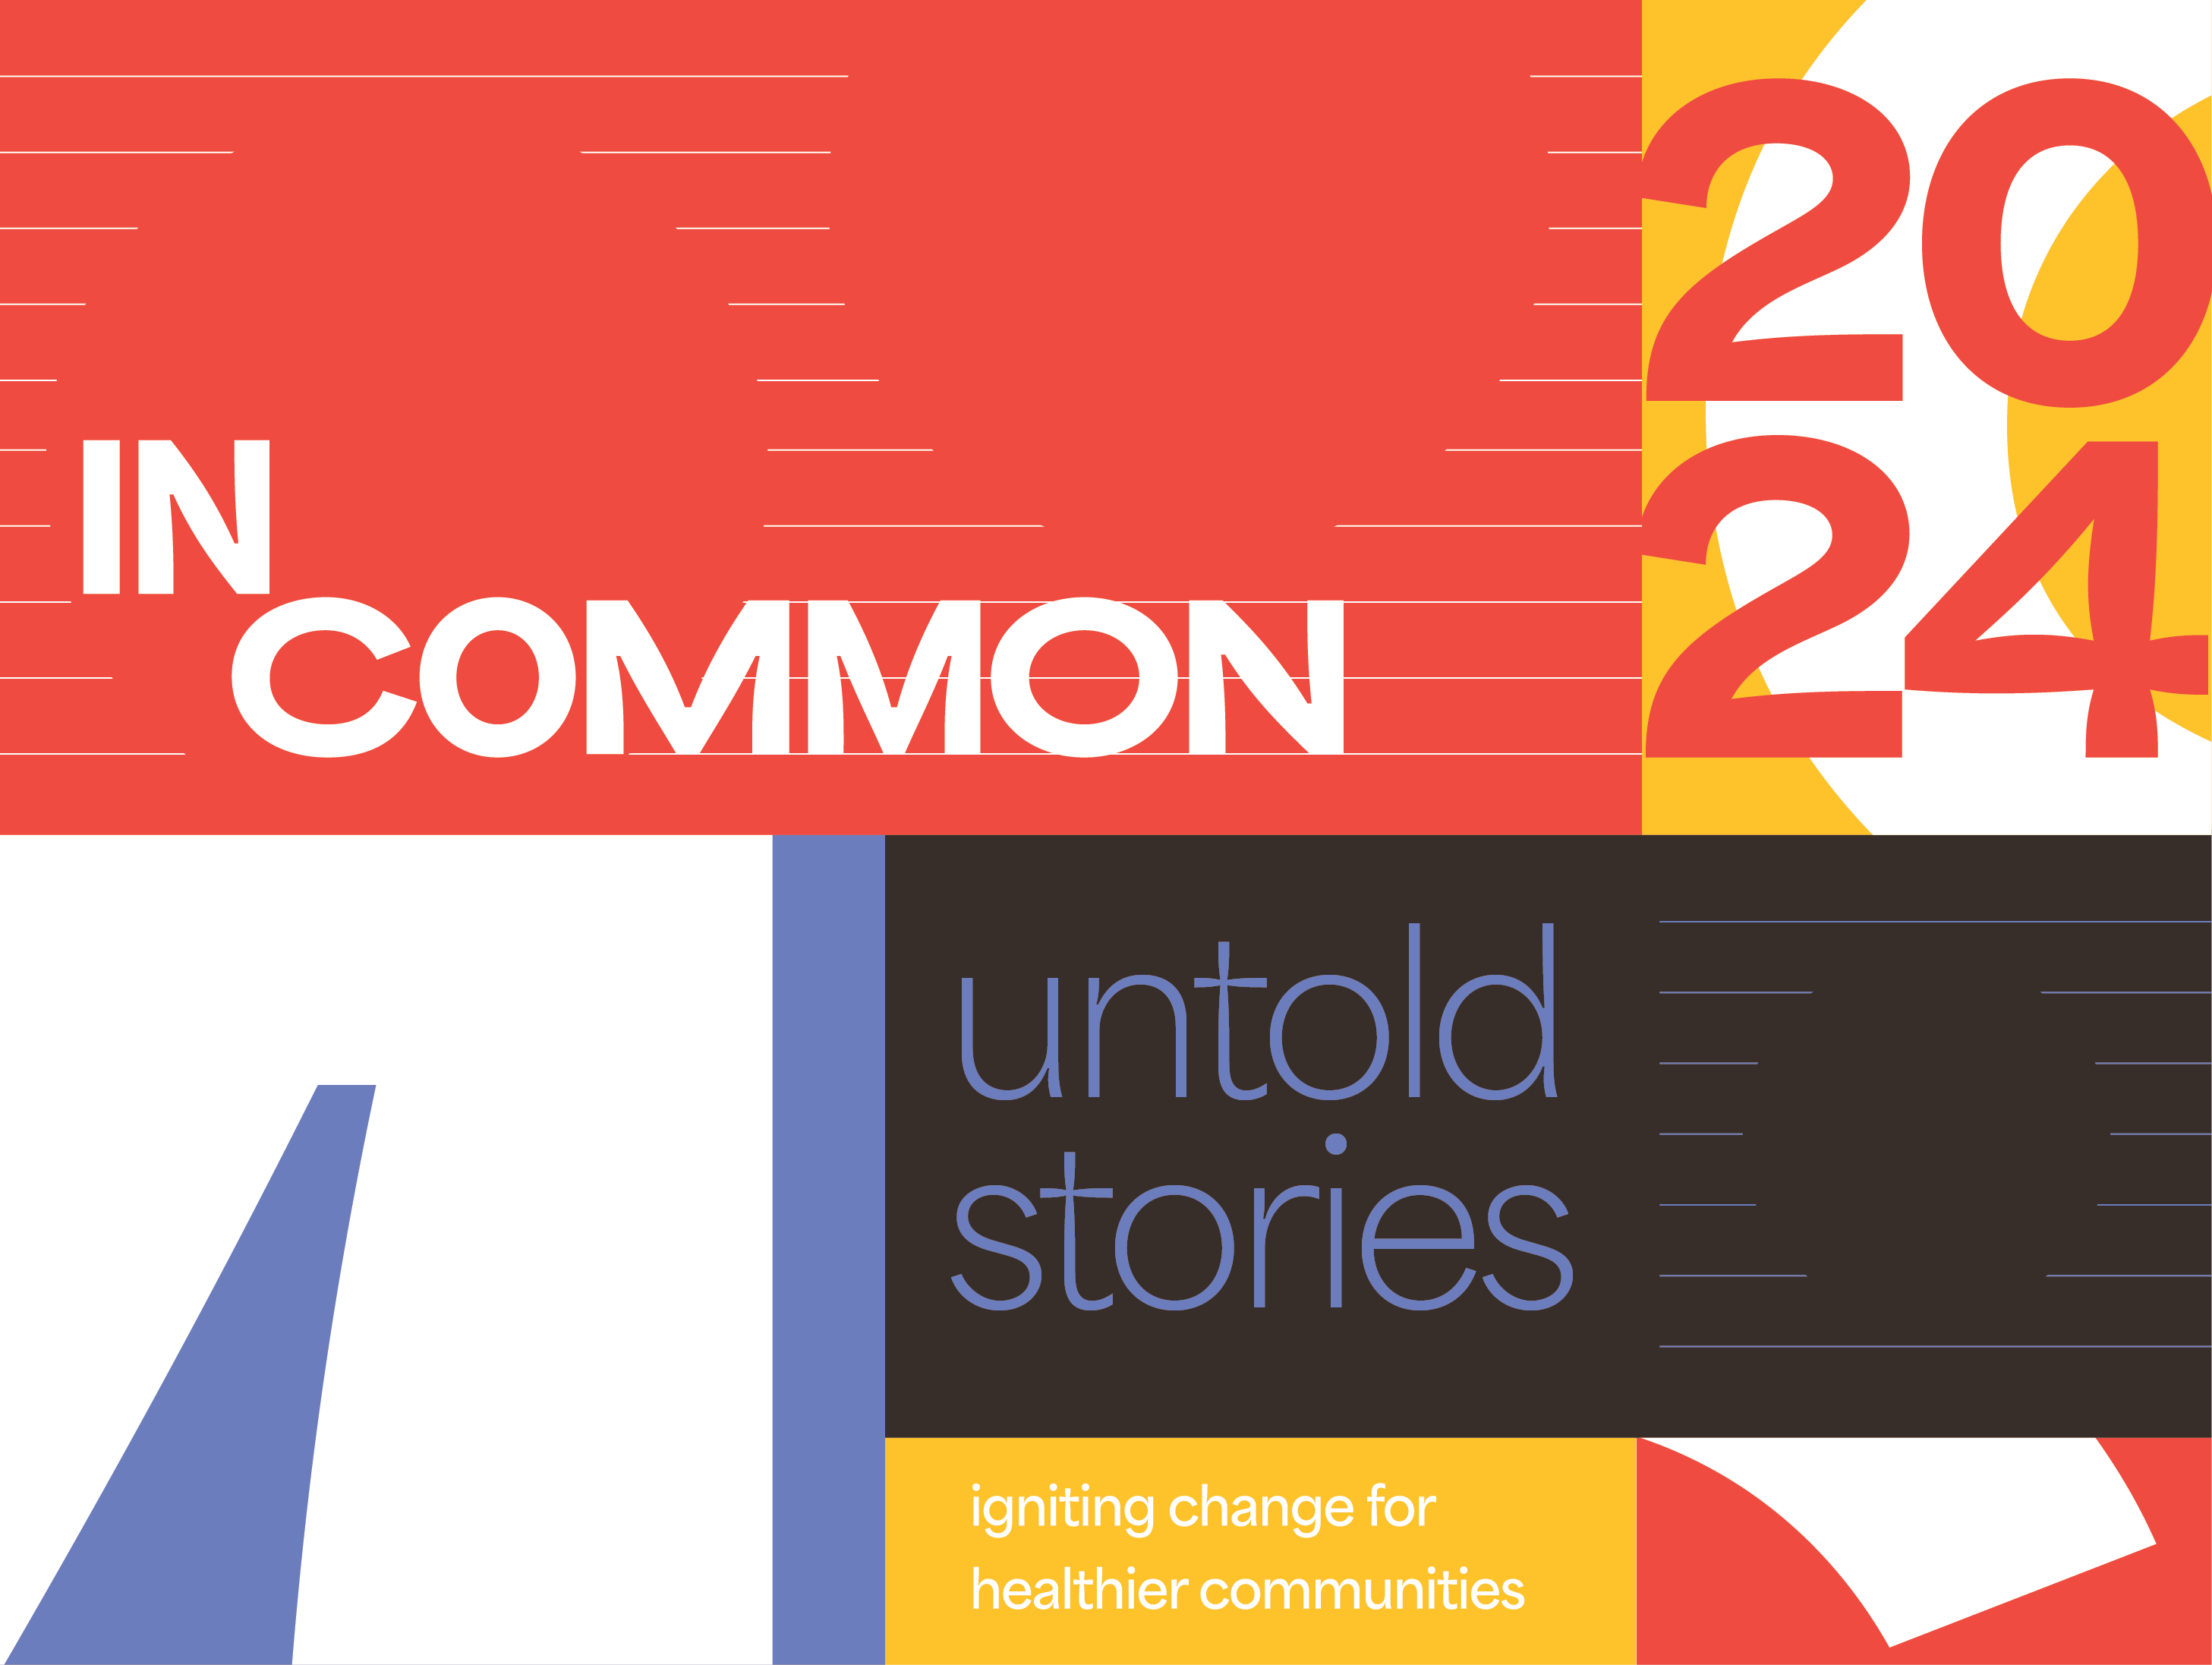 In Common 2024: Untold Stories Igniting Change for Healthier Communities